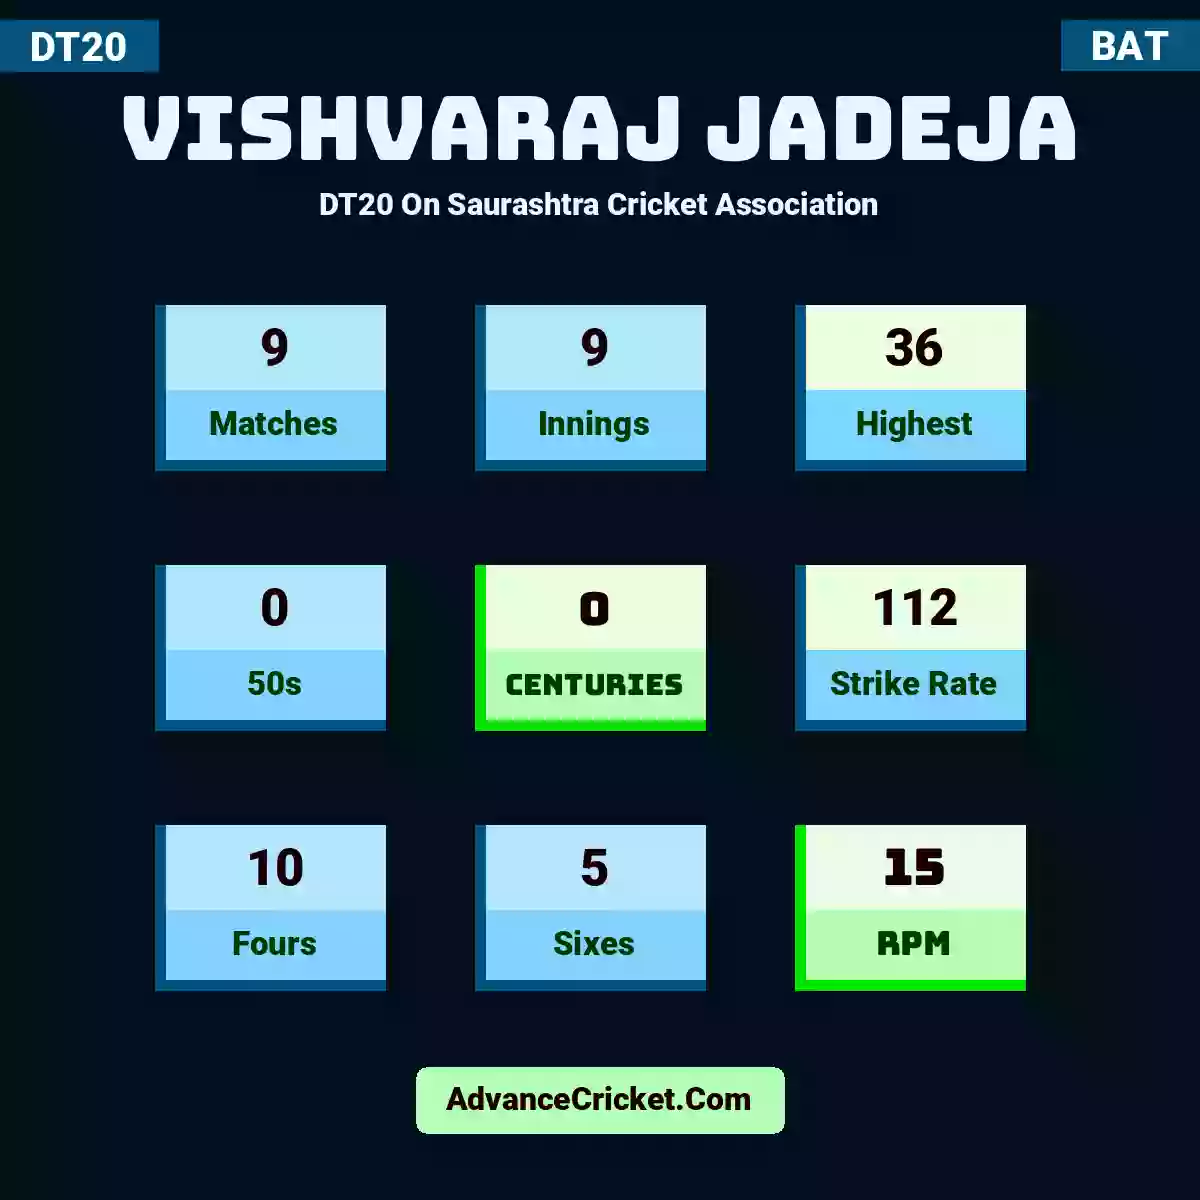 Vishvaraj Jadeja DT20  On Saurashtra Cricket Association, Vishvaraj Jadeja played 9 matches, scored 36 runs as highest, 0 half-centuries, and 0 centuries, with a strike rate of 112. V.Jadeja hit 10 fours and 5 sixes, with an RPM of 15.